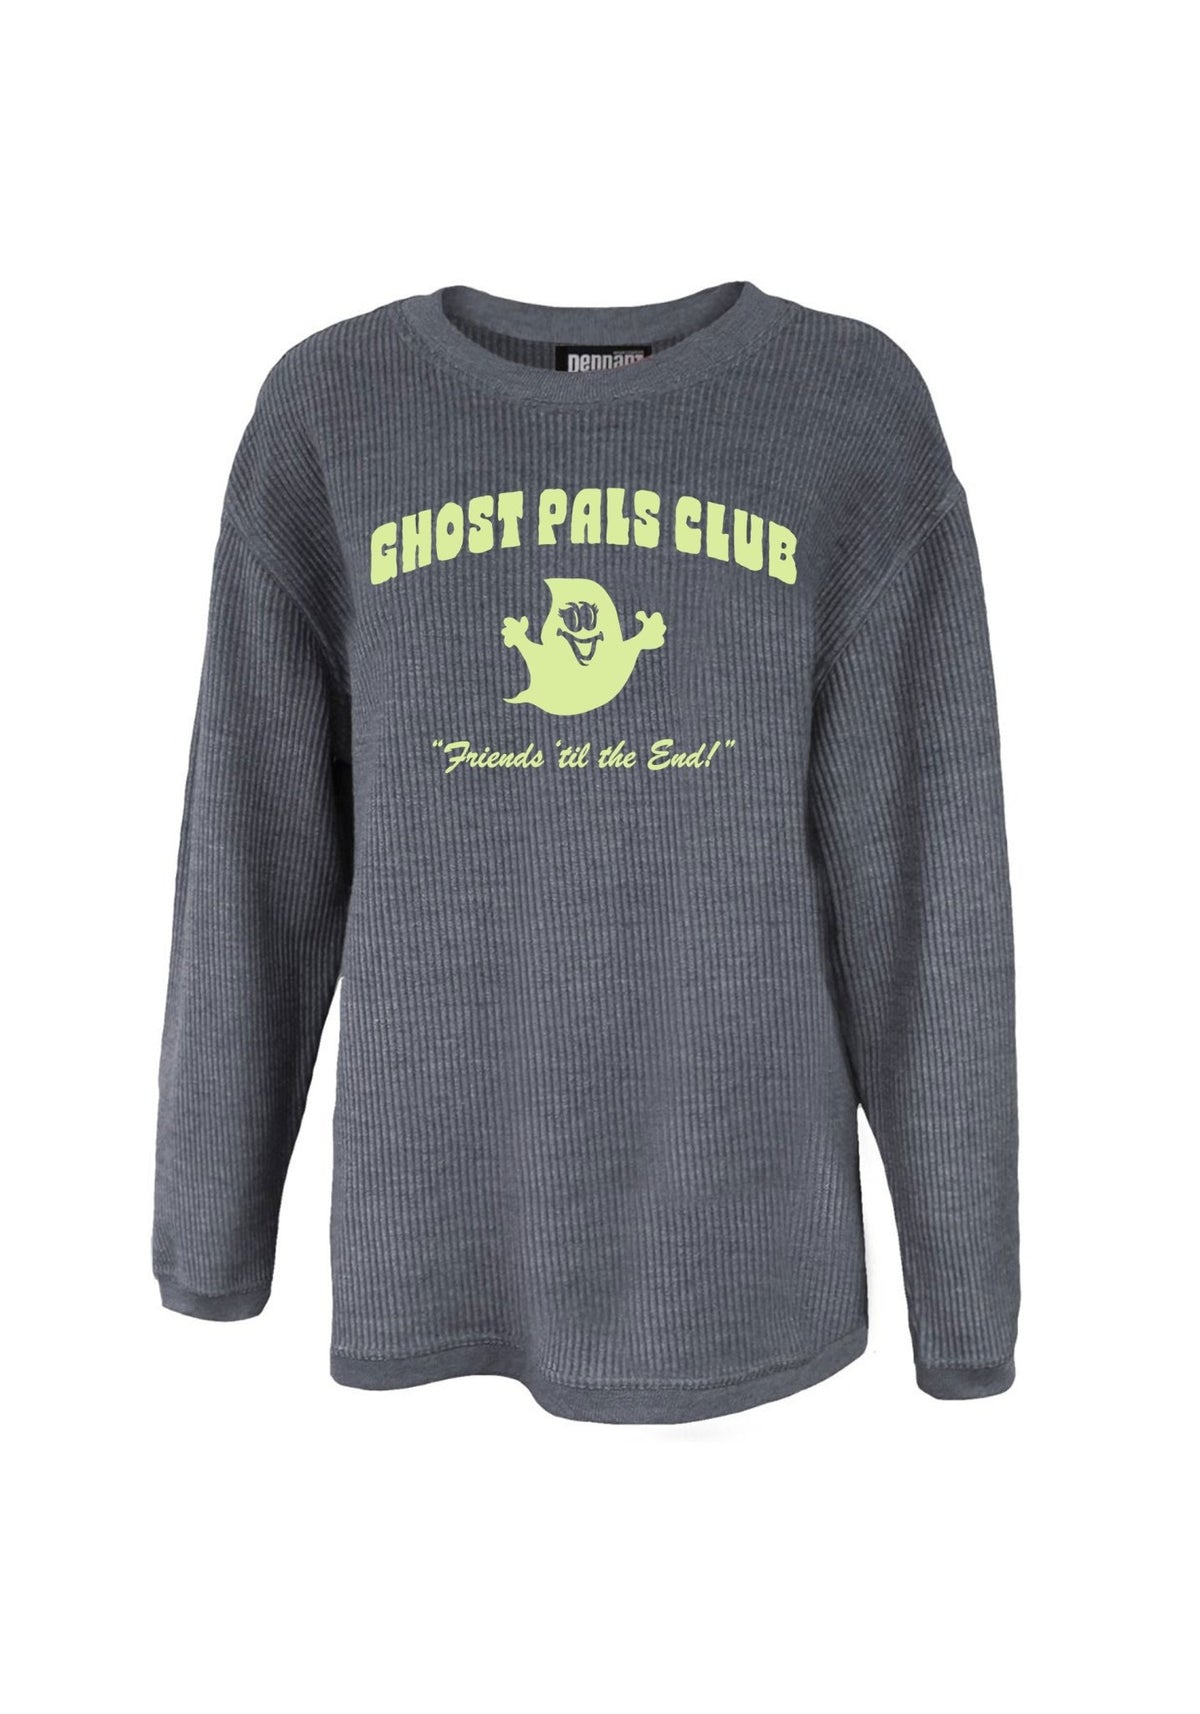 Ghost Pals Club Glow-in-the-Dark Corded Sweatshirt by kaeraz fall friends ghosts